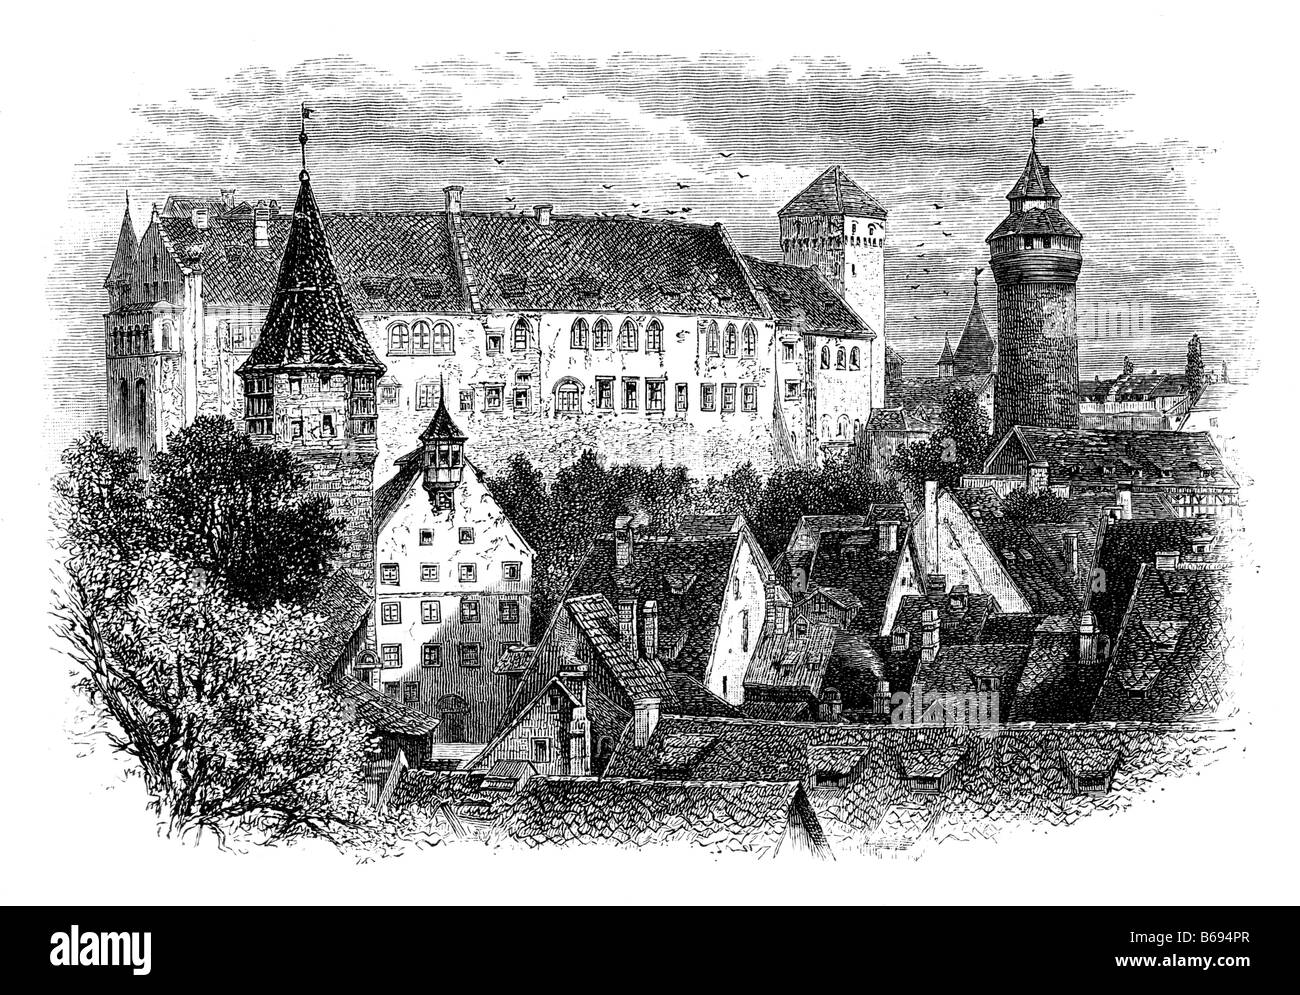 Die alte Burg Nürnberg Deutschland 19. Jahrhundert Illustration Stockfoto